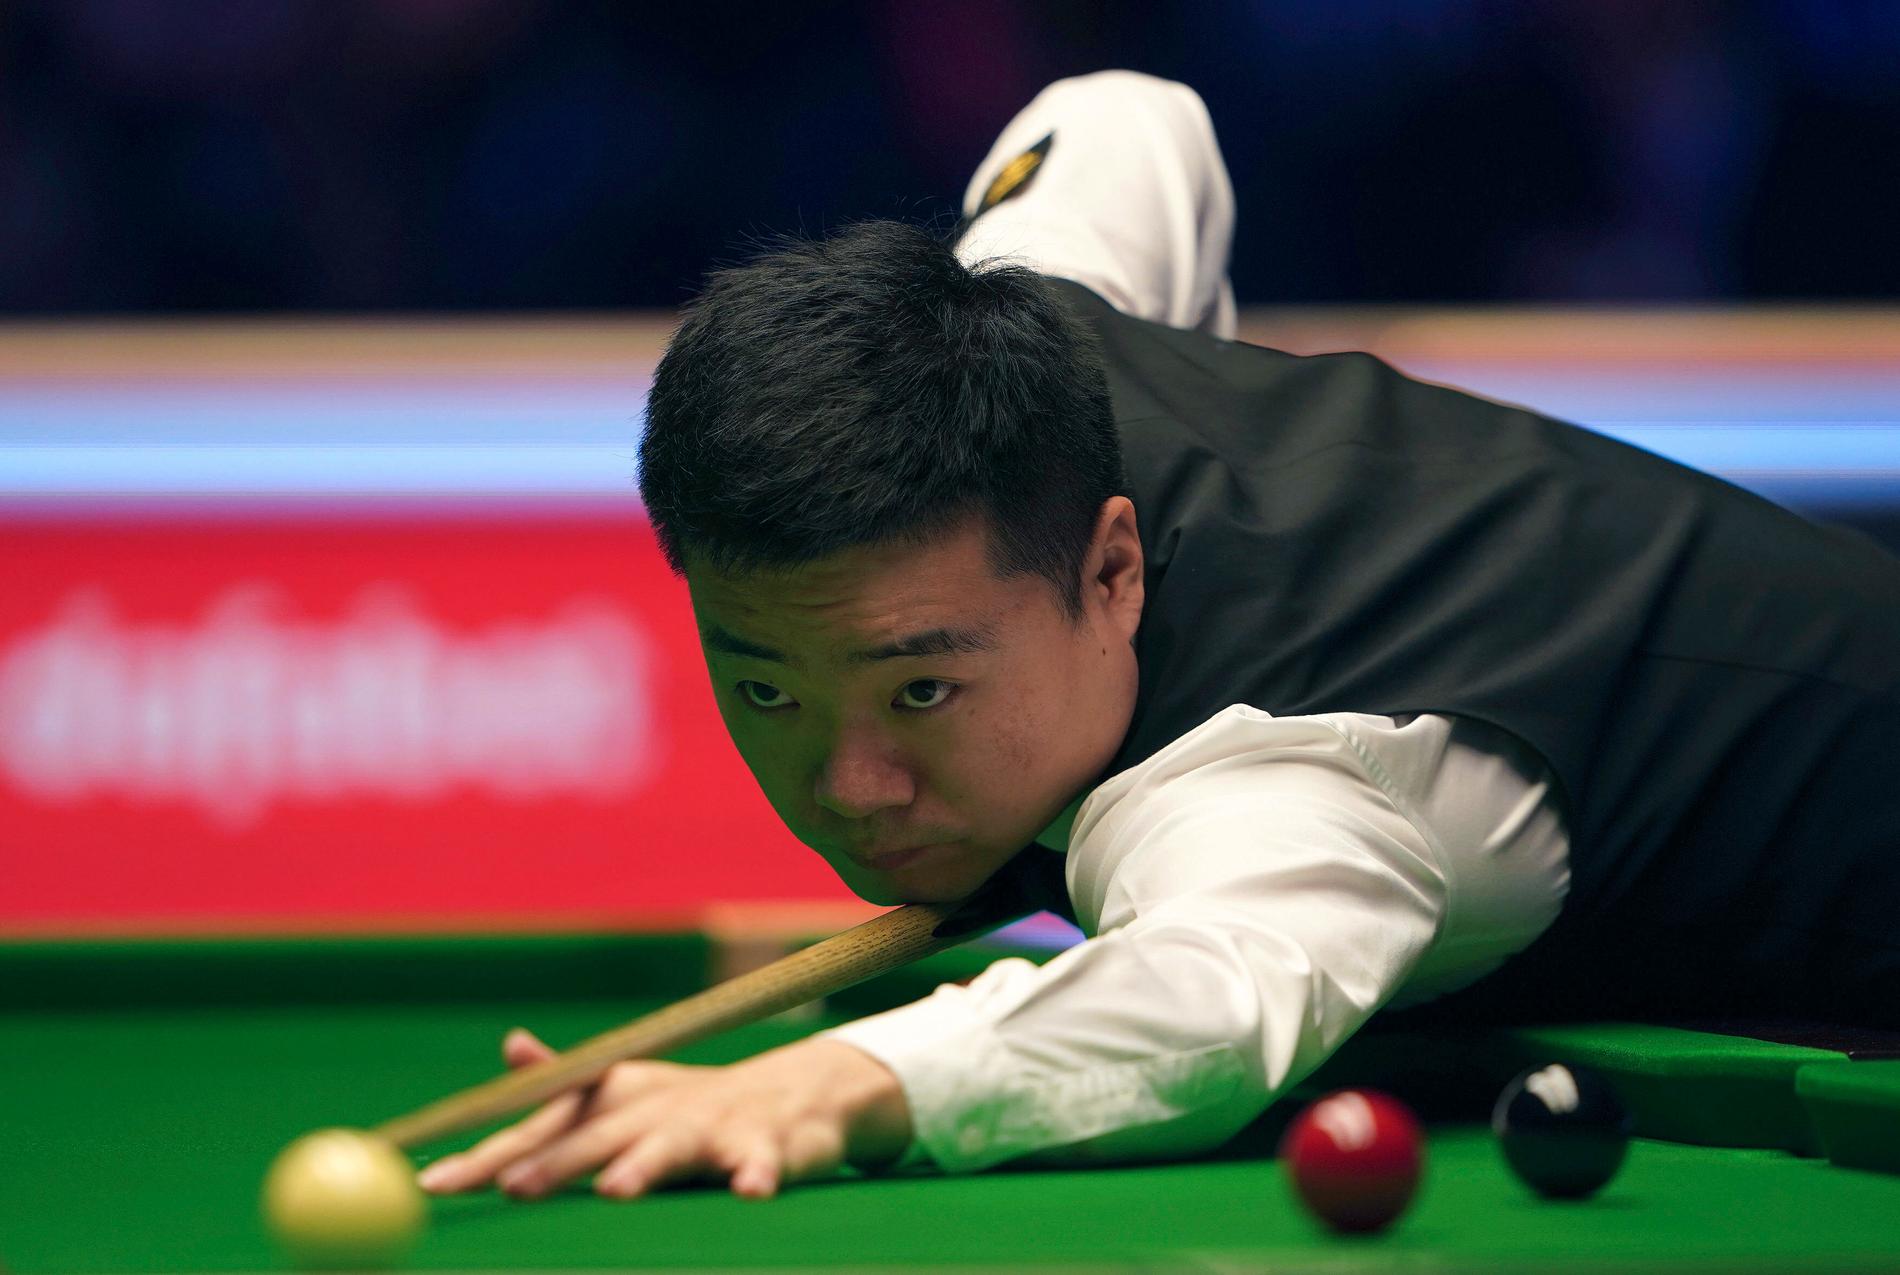 Ding Junhui i 2020 Snookers Masters i London i januari.